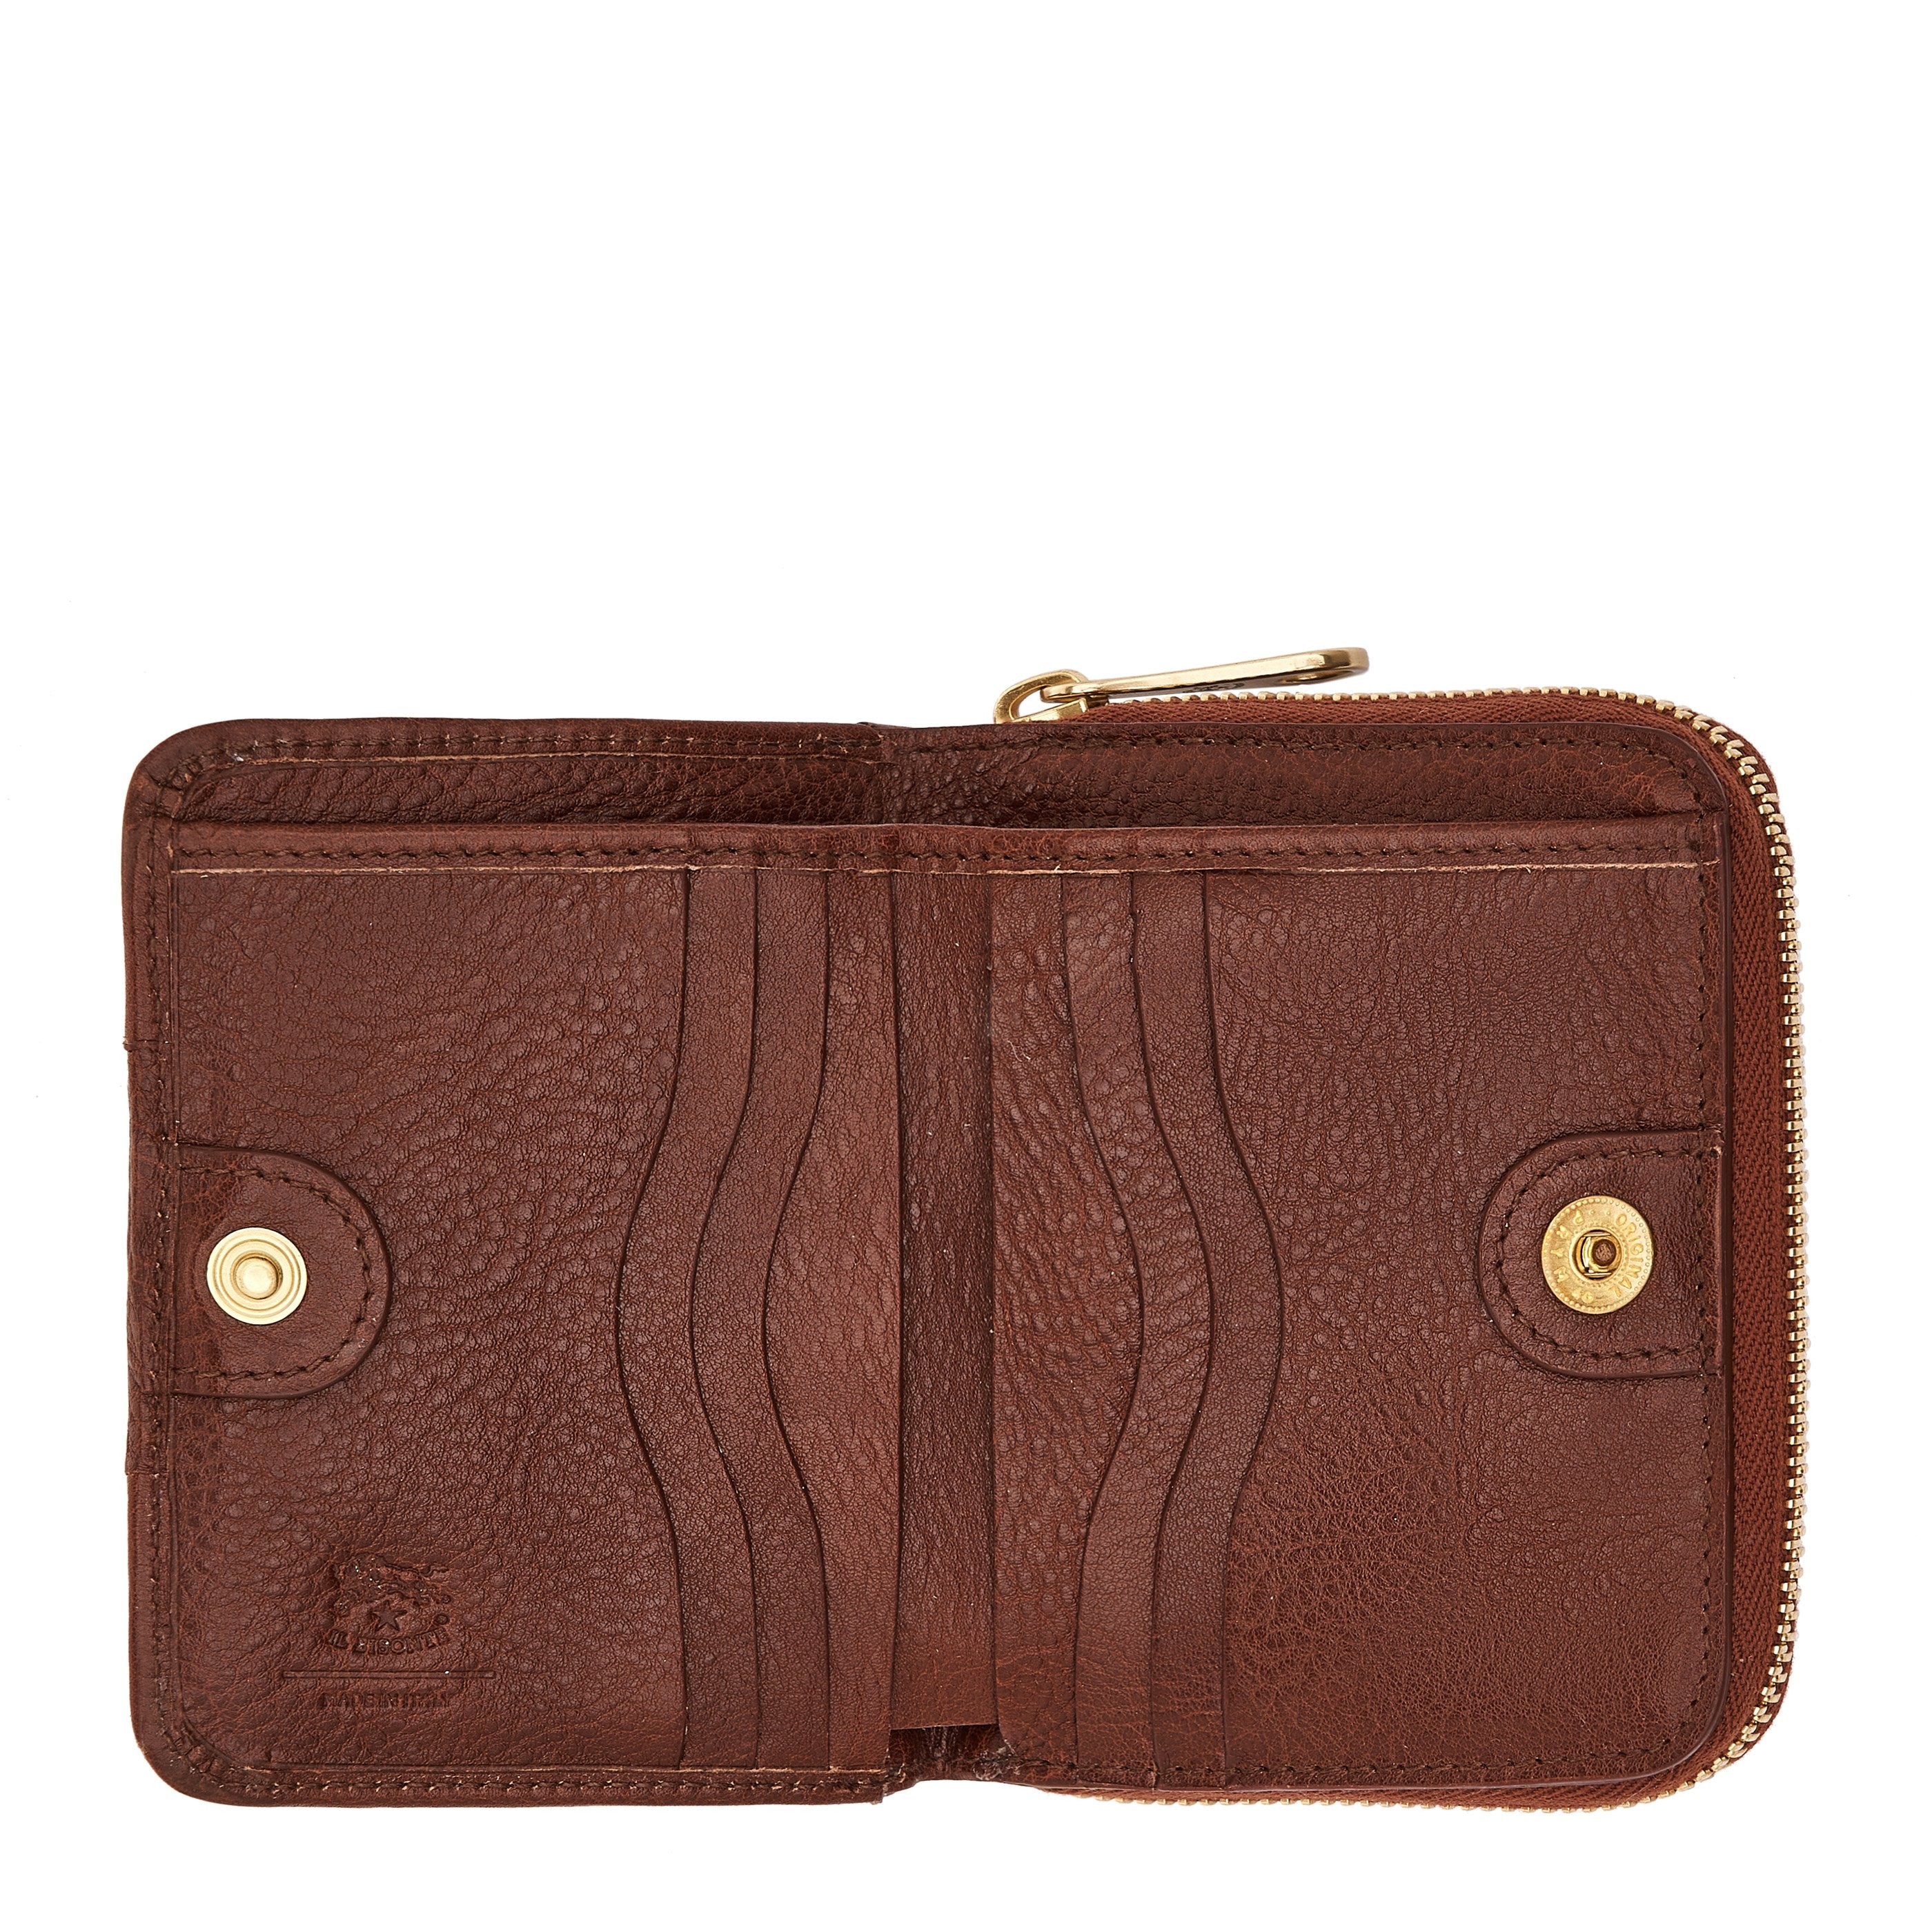 Solaria | Women's zip around wallet in leather color arabica